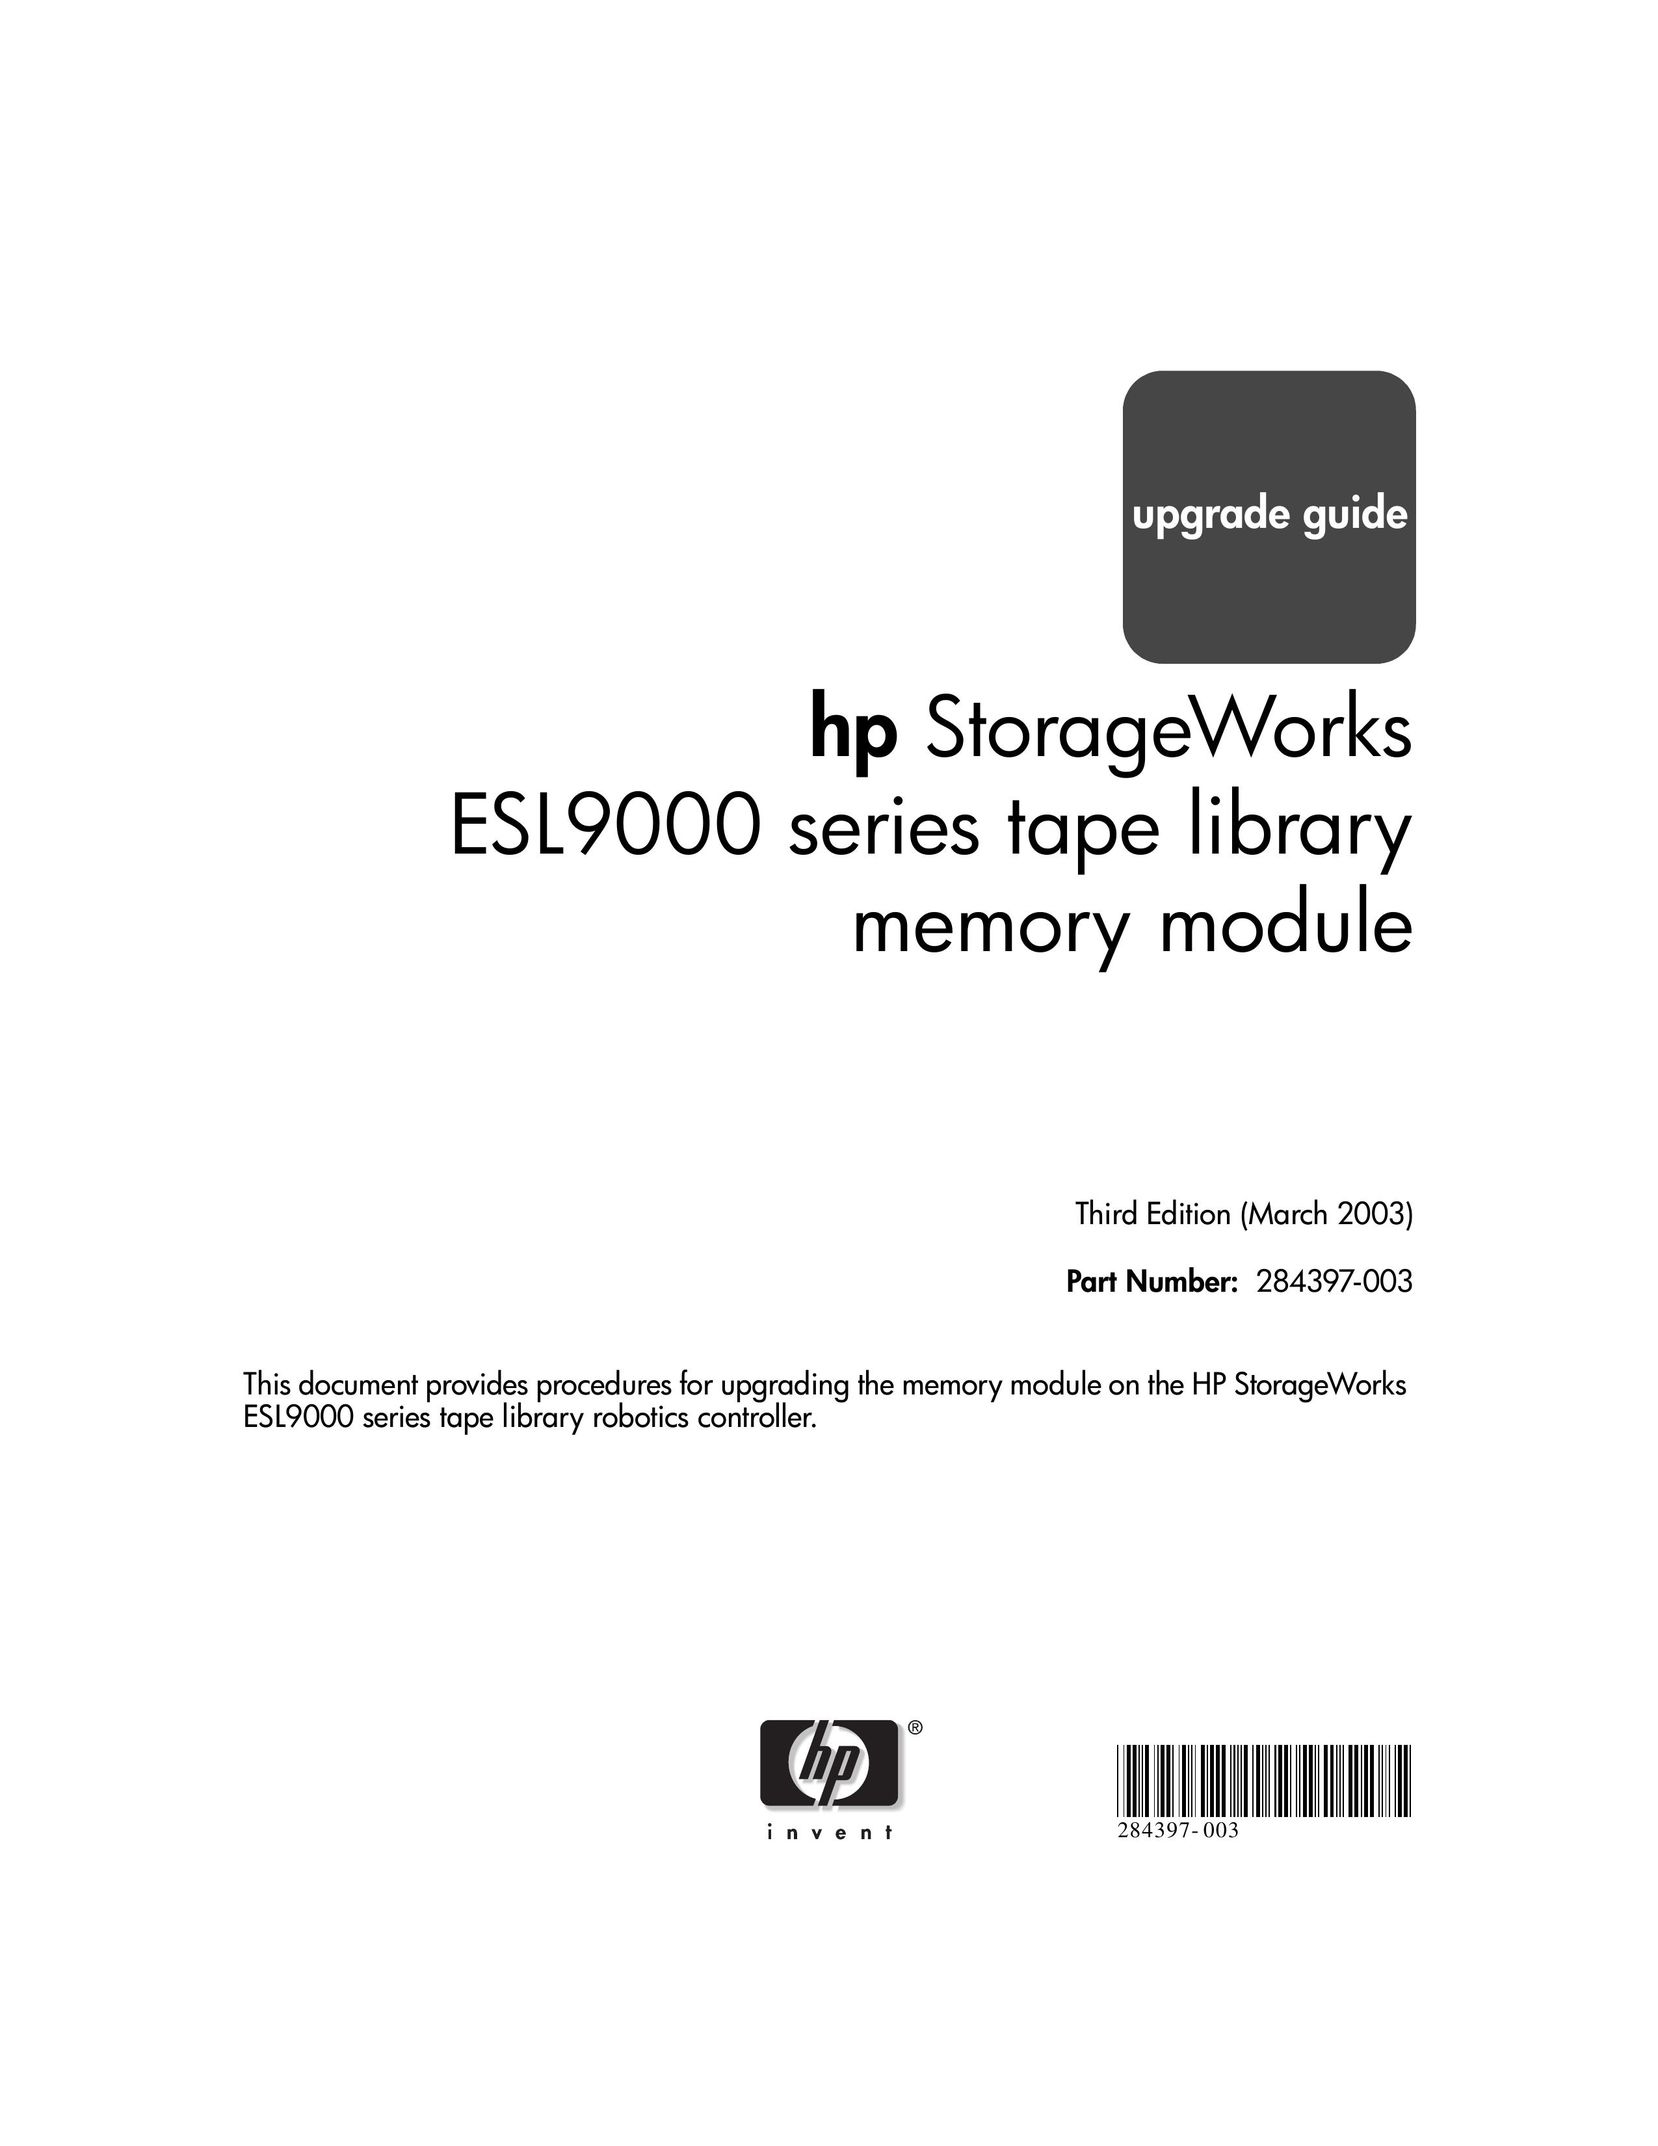 HP (Hewlett-Packard) hp StorageWorks Computer Hardware User Manual